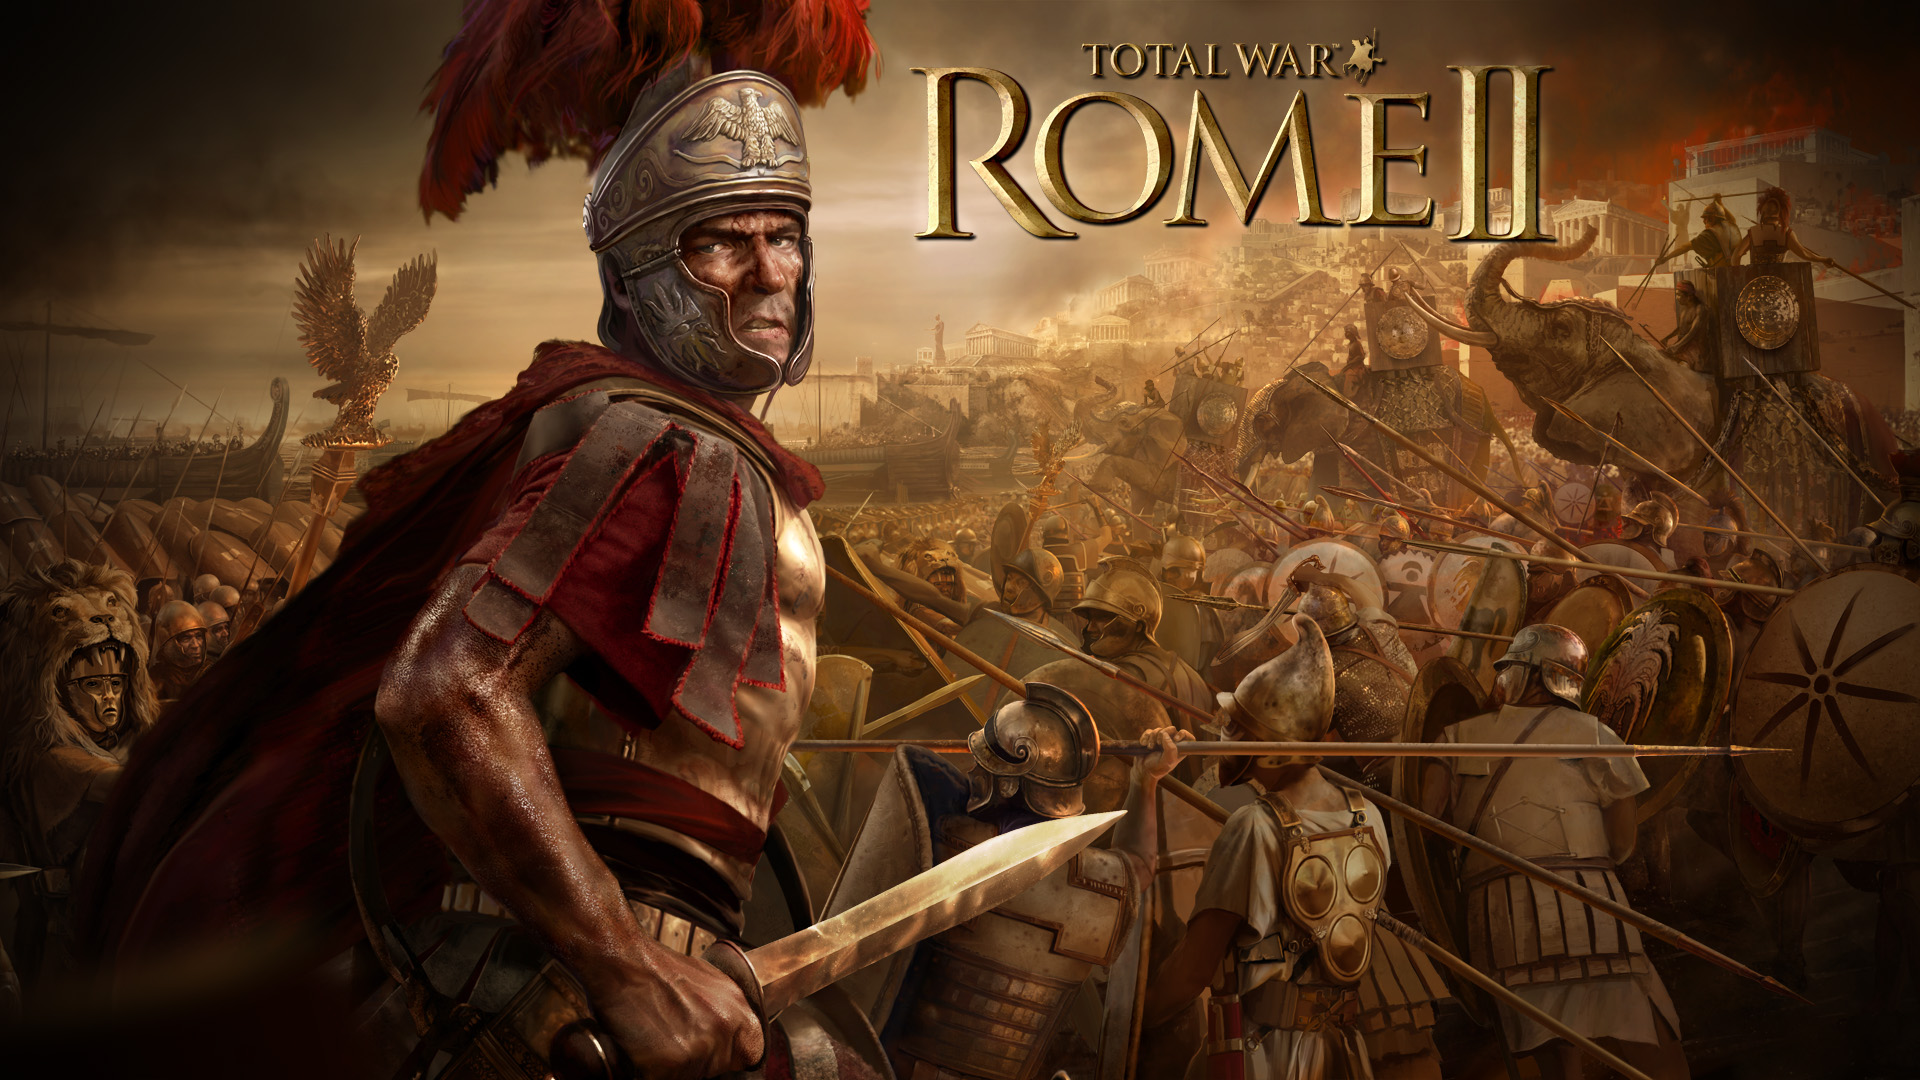 rome total war 2 free download full game pc windows 10